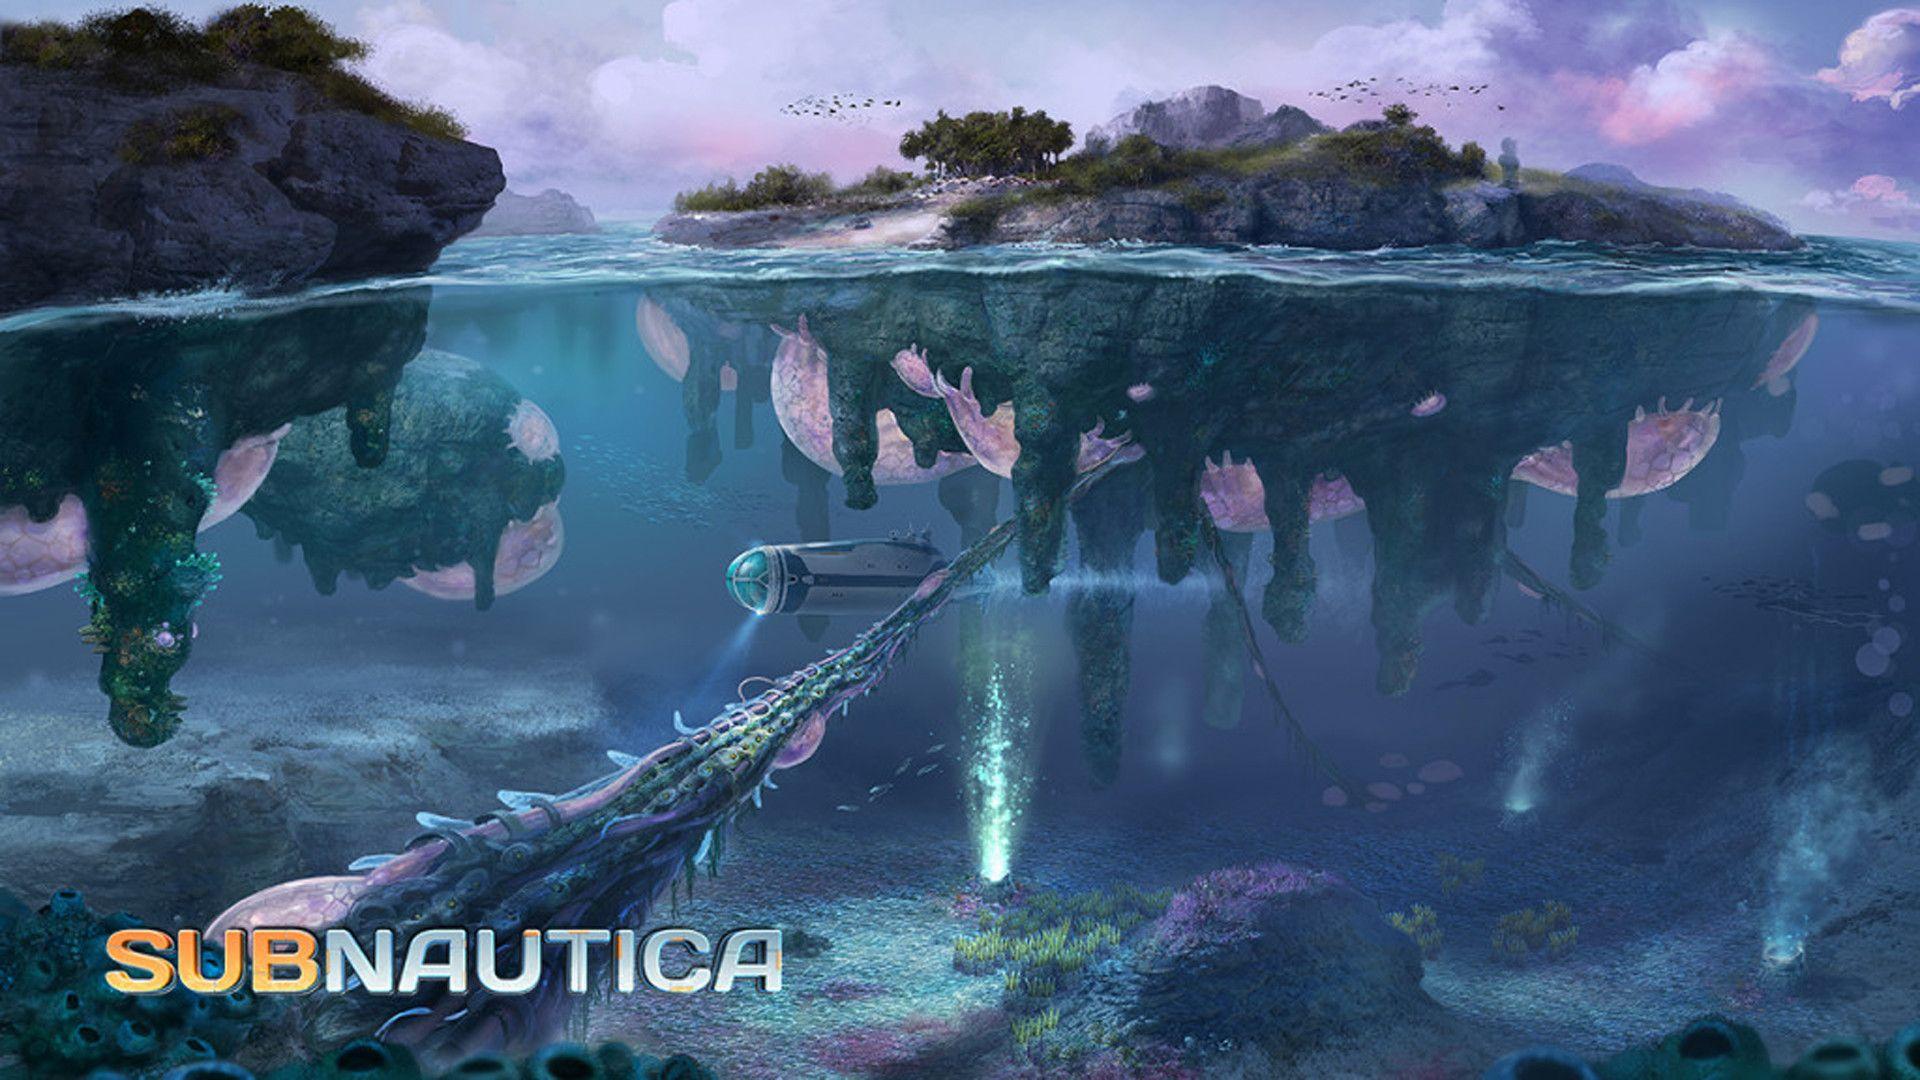 Subnautica Wallpaper background picture